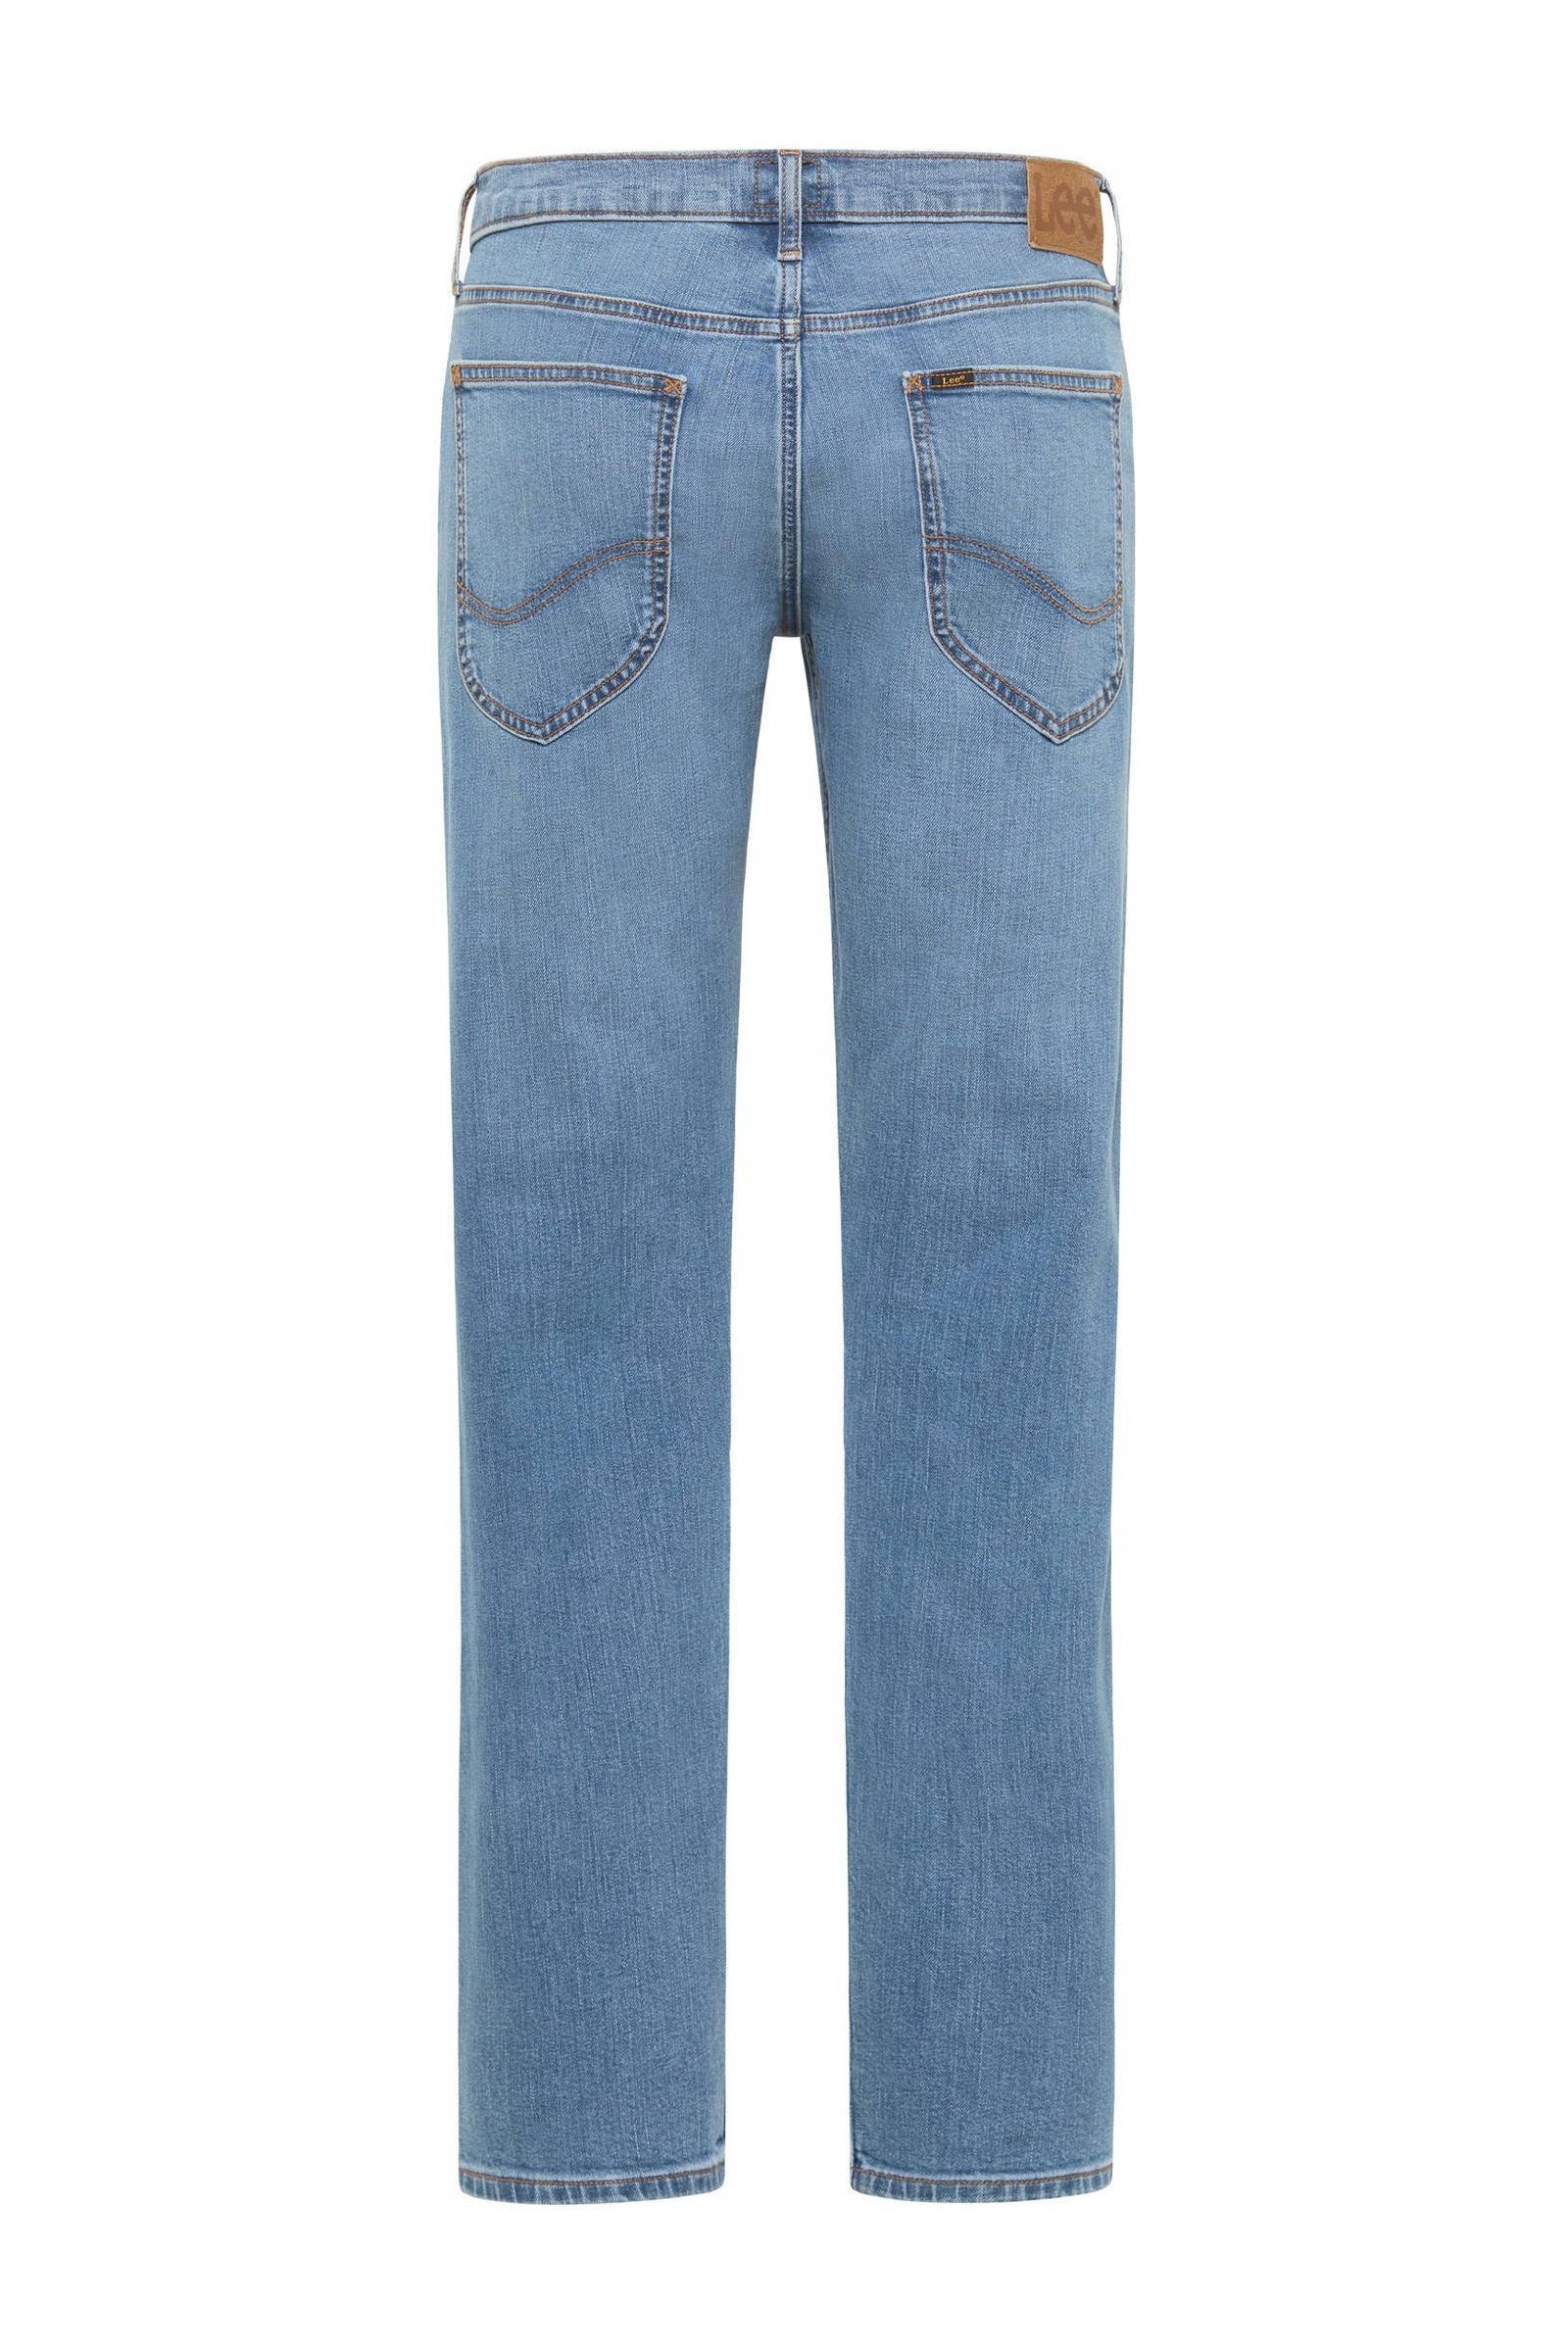 Lee slim tapered fit jeans LUKE fresh mid worn